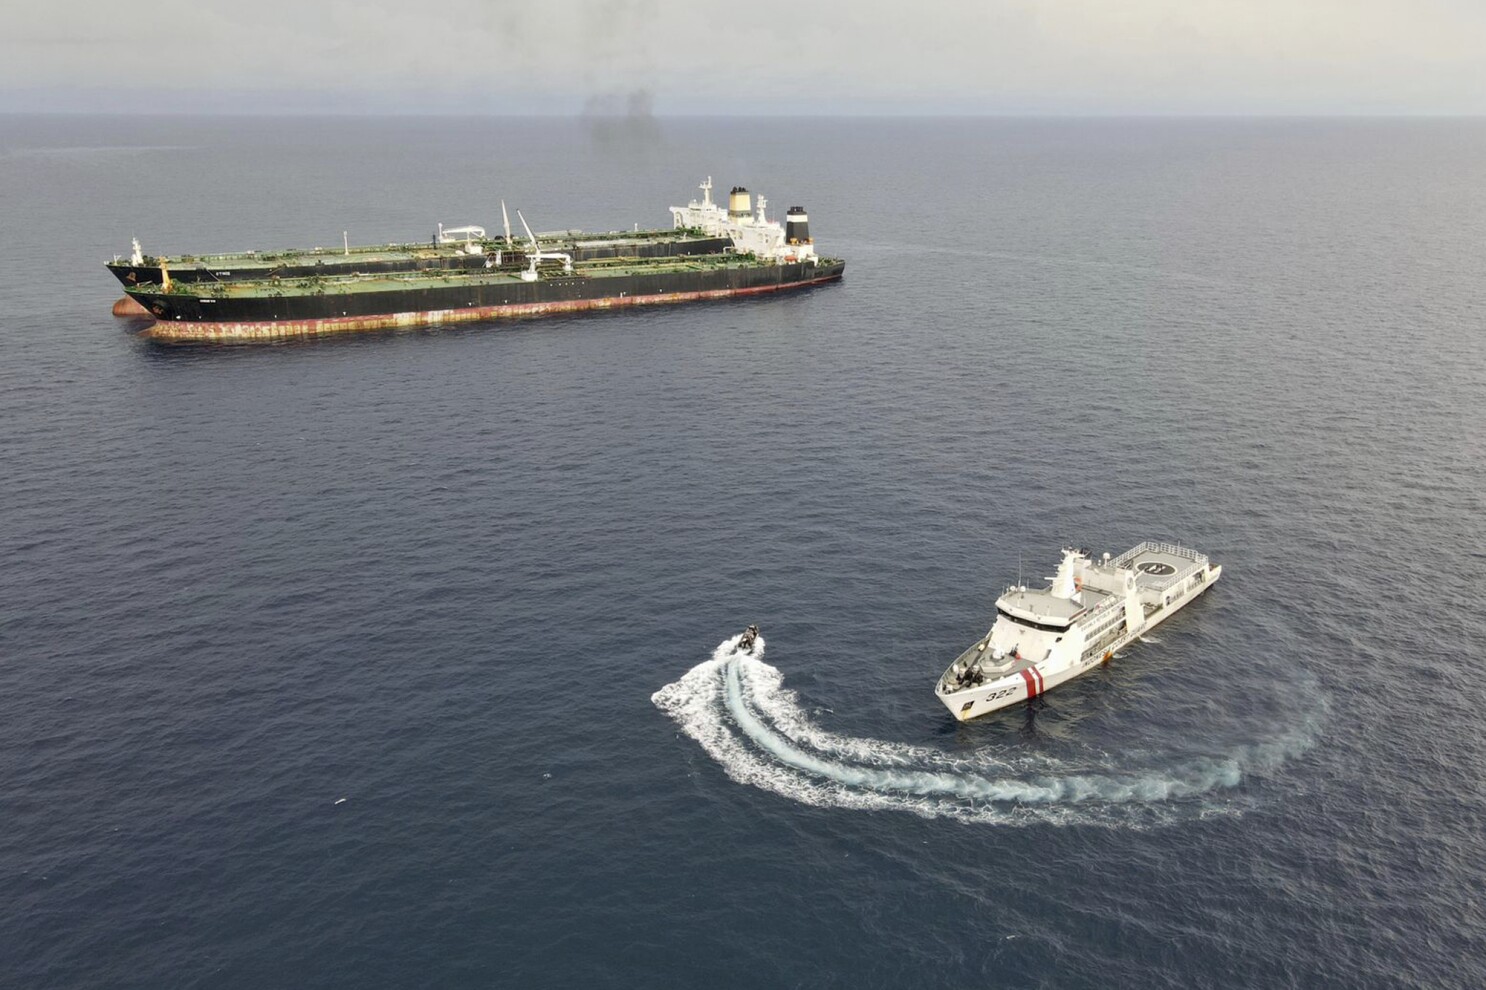 Oil tankers 'go dark' off Venezuela to evade US sanctions